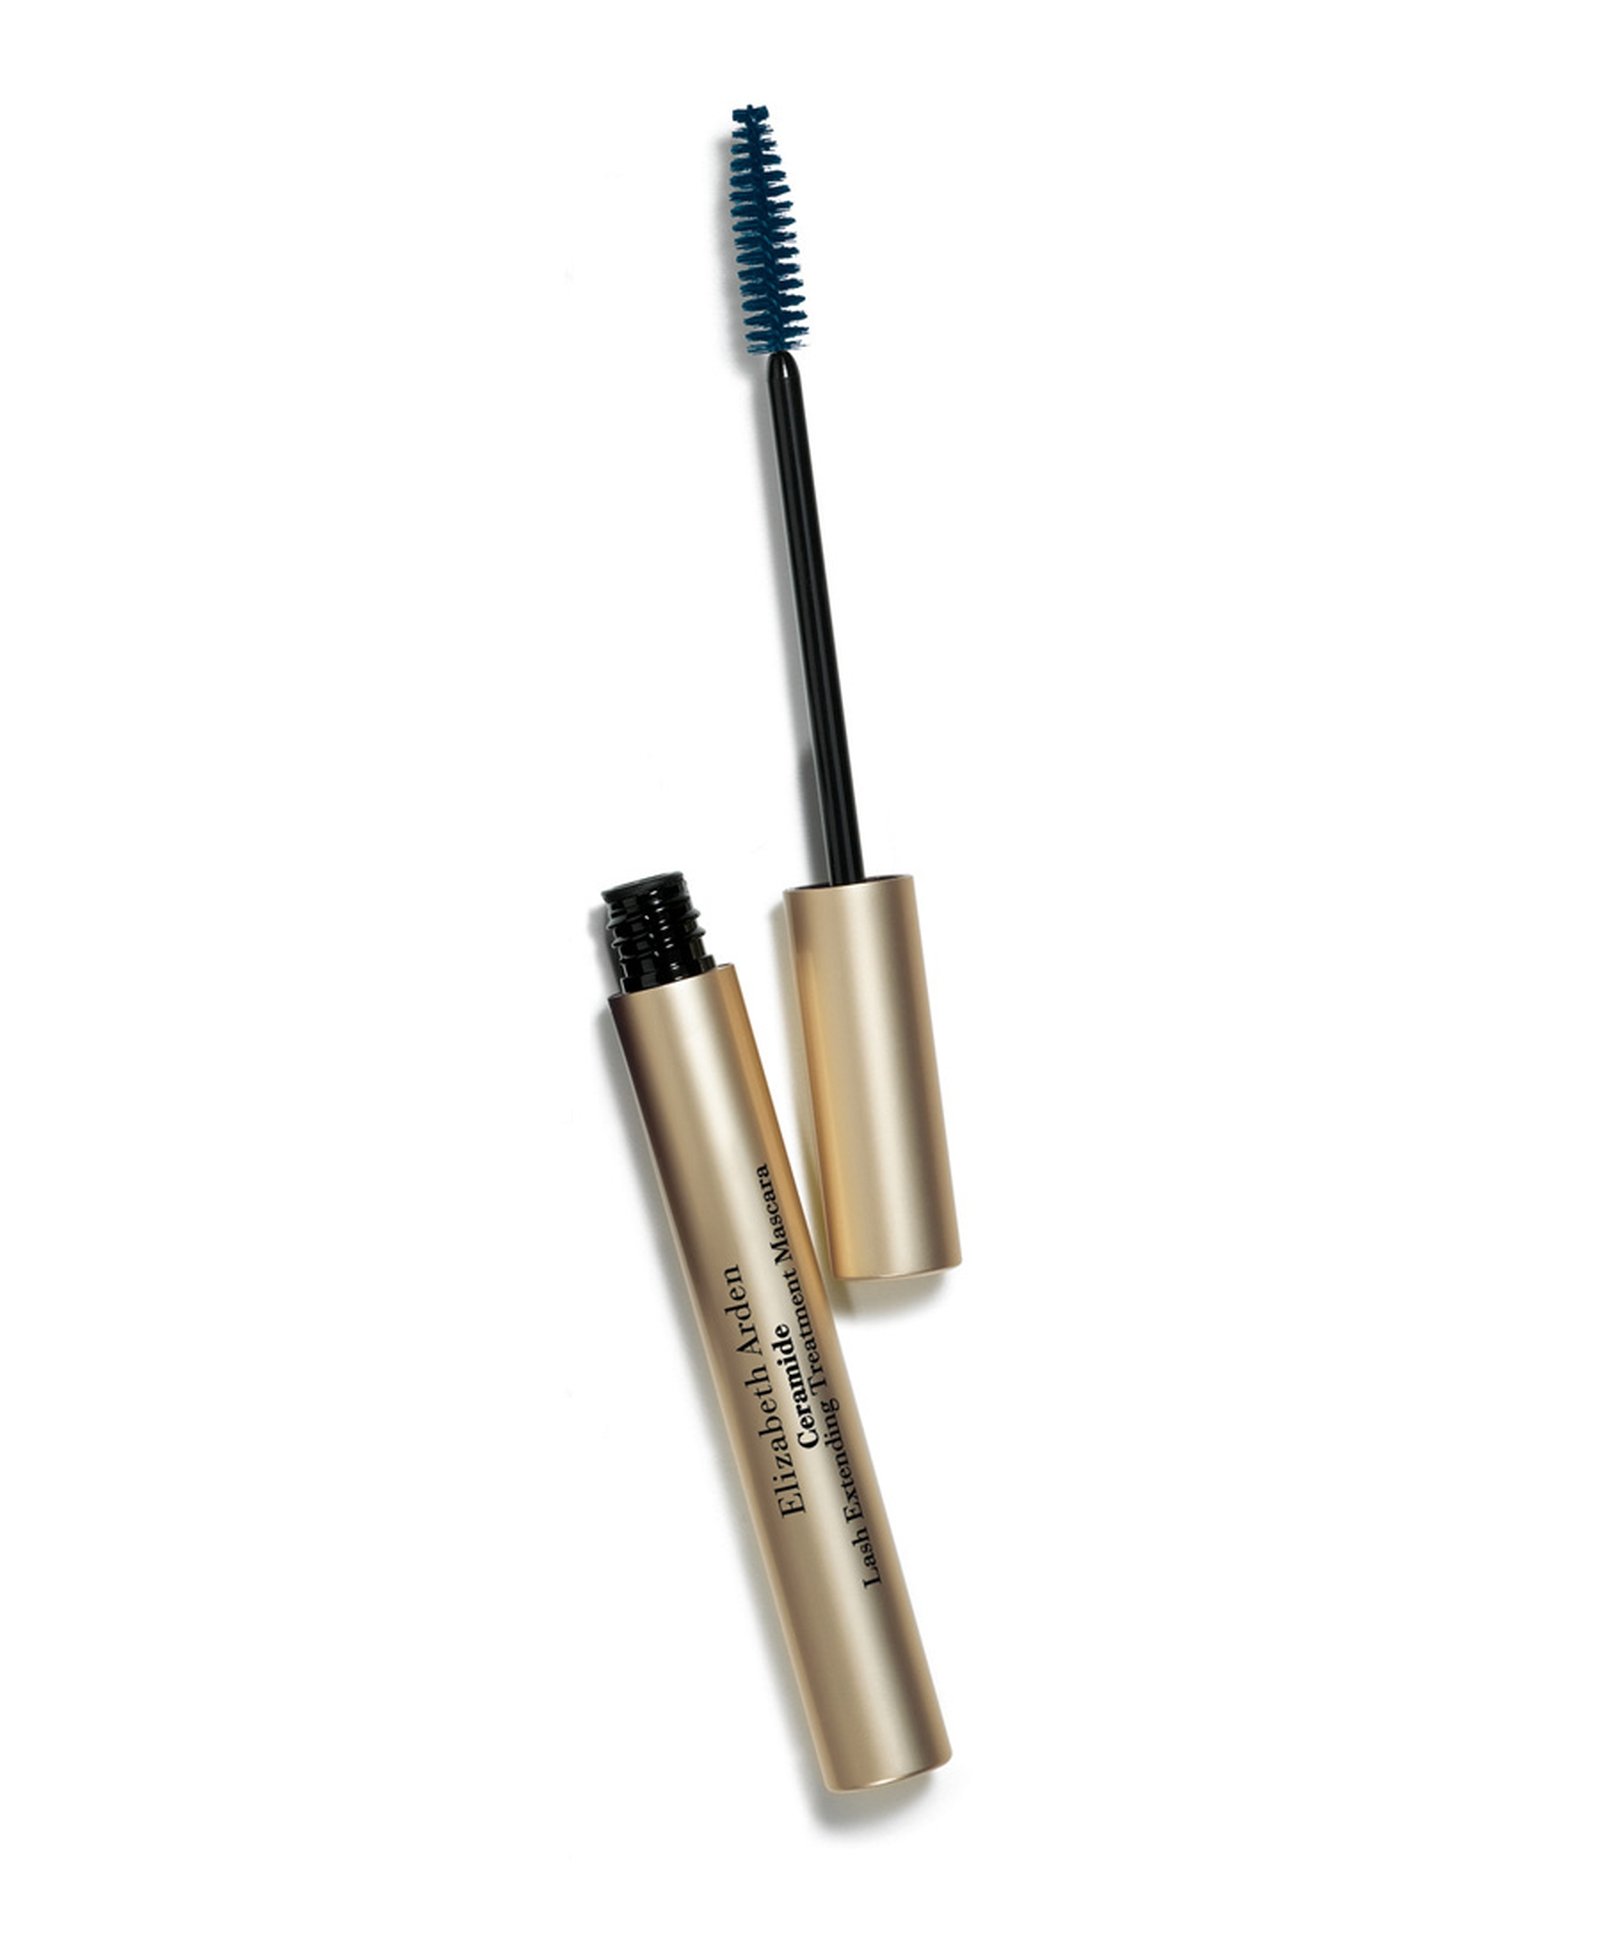 Product Arden Ceramide Lash Extending Treatment Mascara in Blue